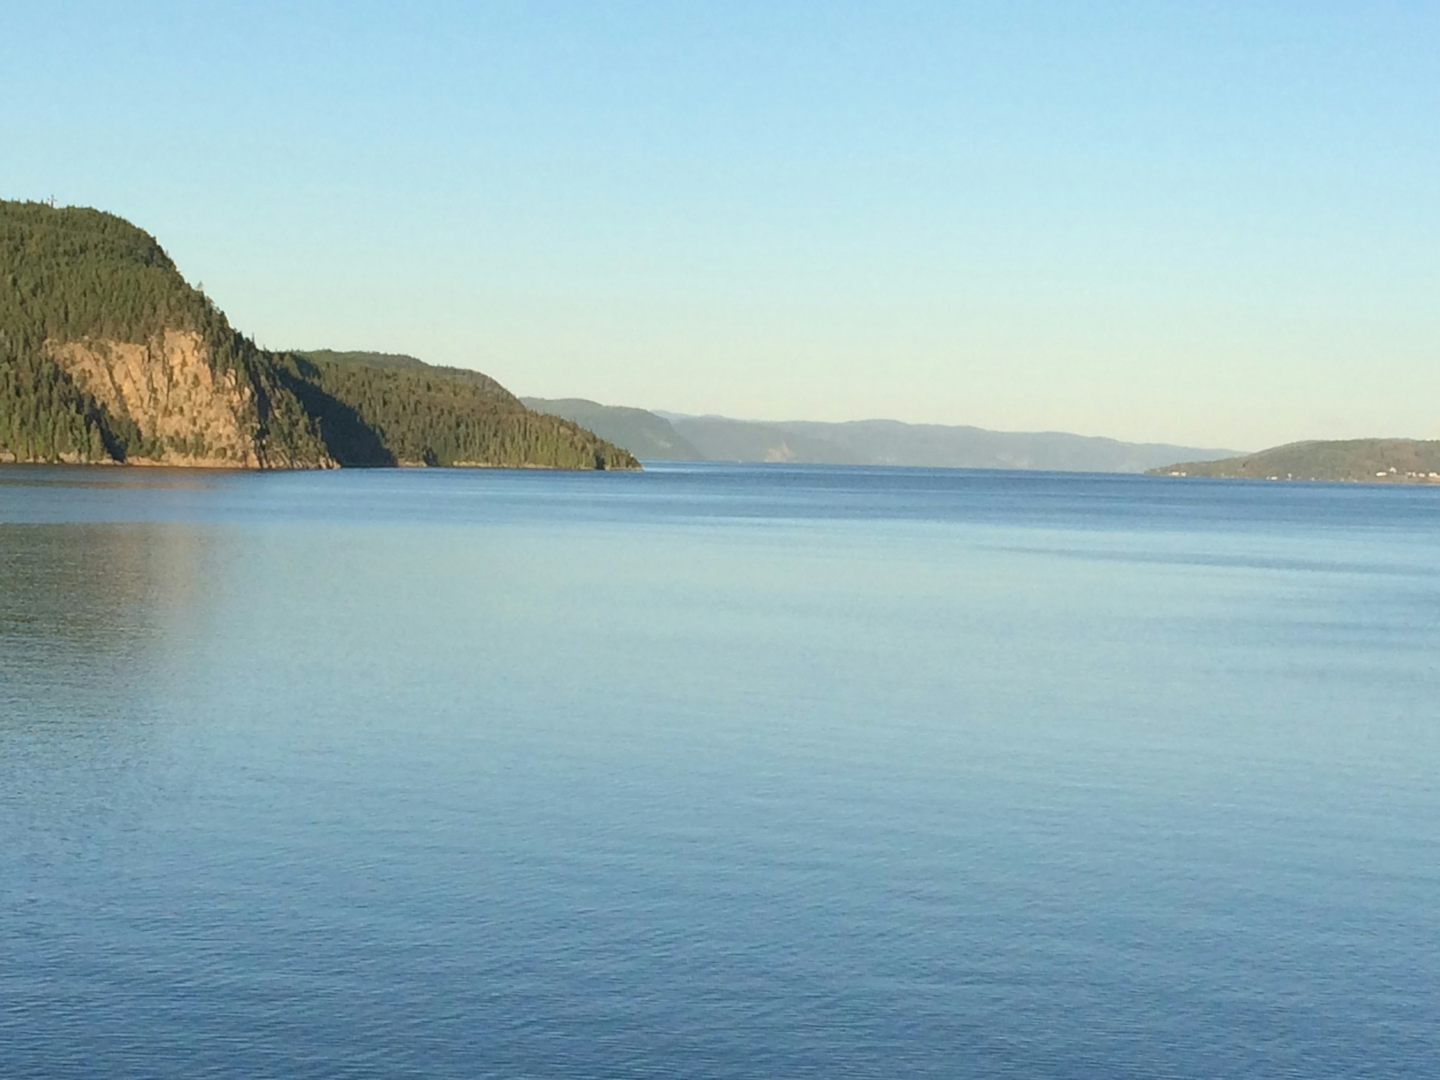 Saguenay fjord.